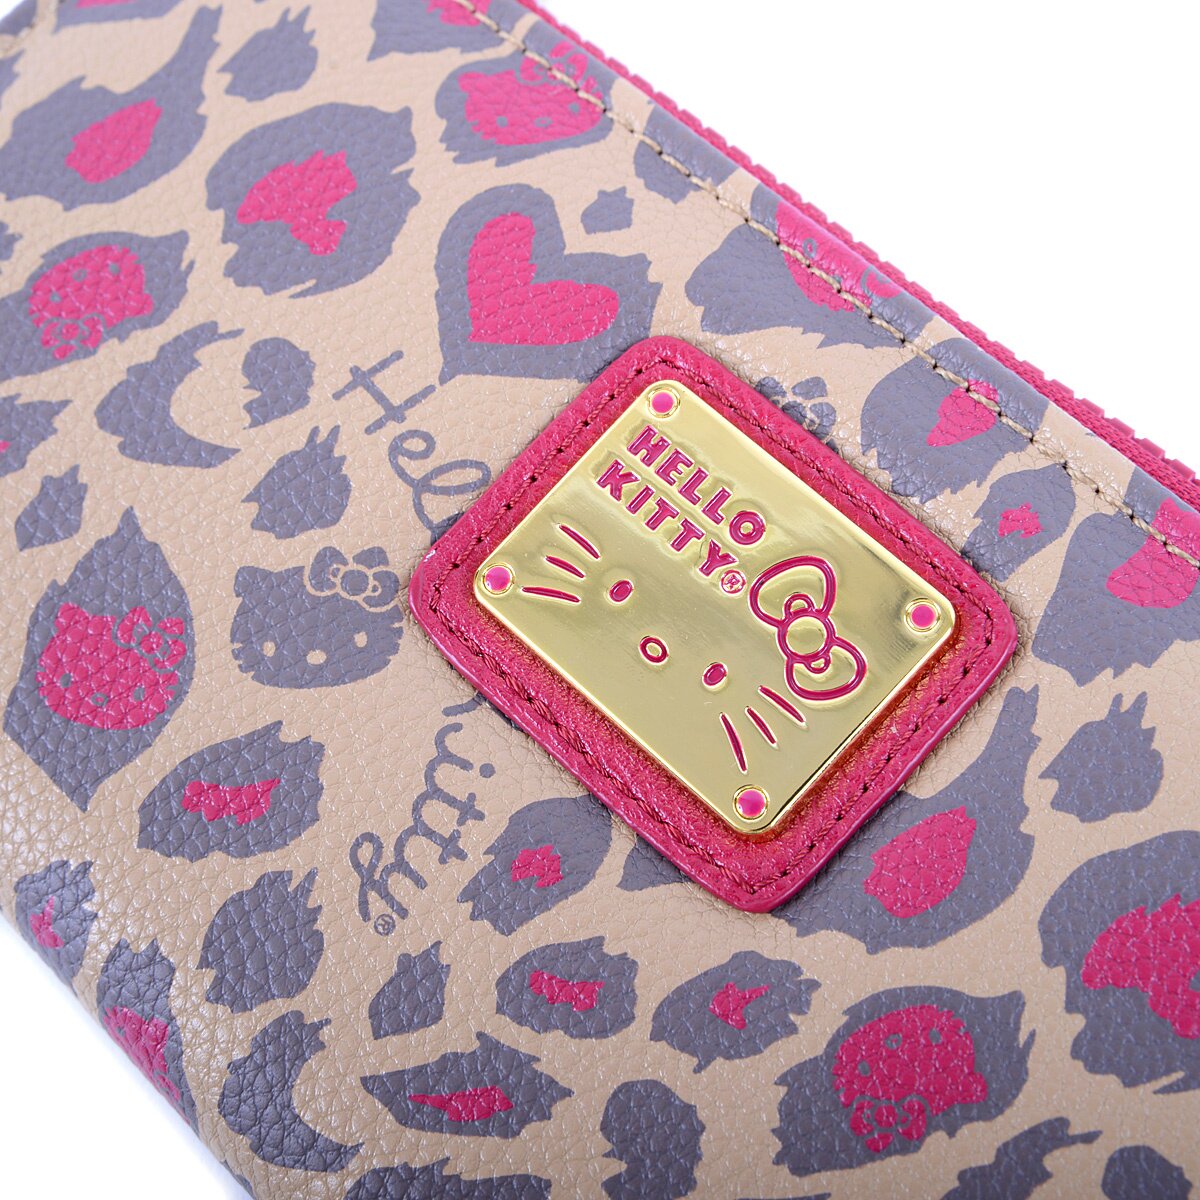 Loungefly Hello Kitty Leopard Print Zip Wallet